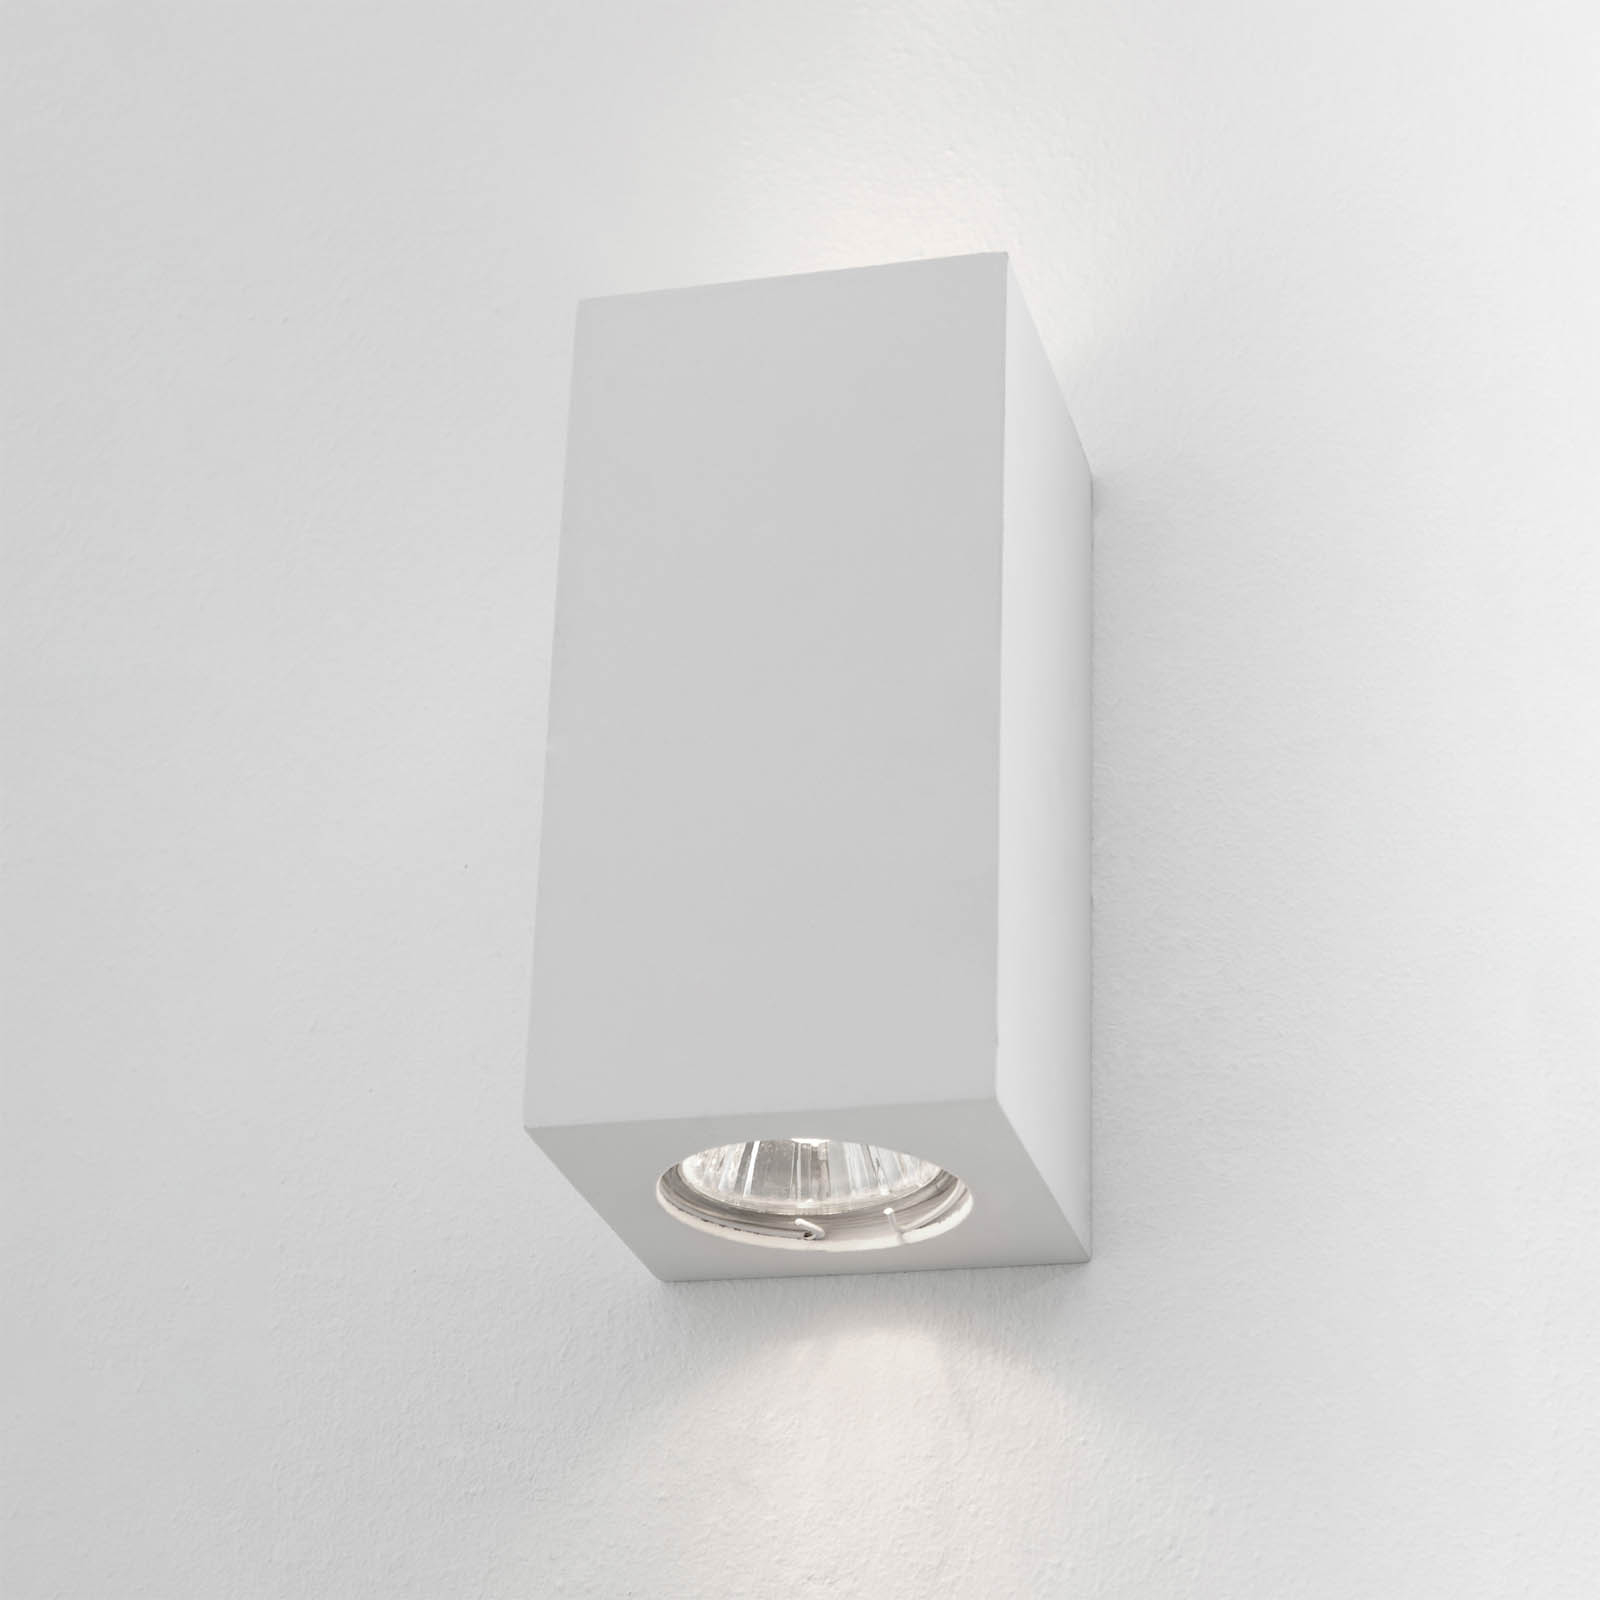 Cube wall light, ceramics, white, height 15.5 cm